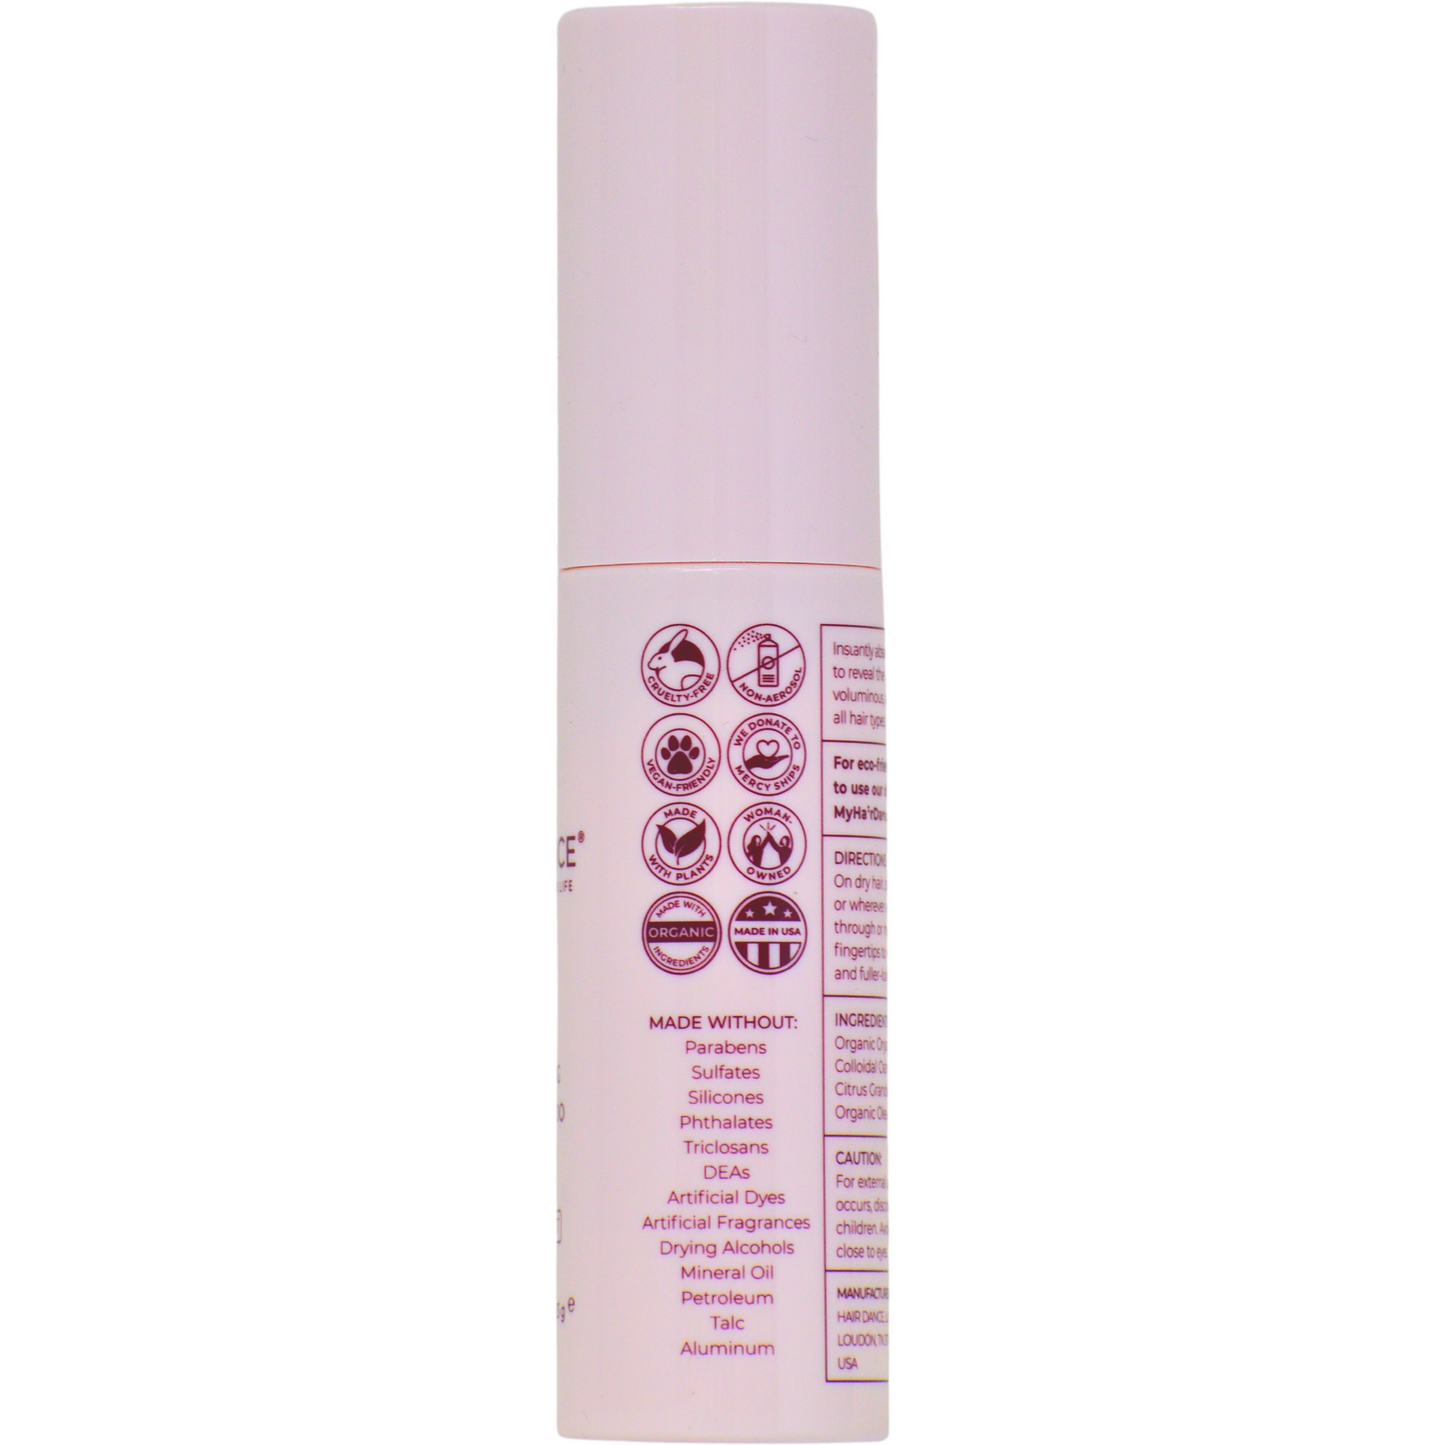 Grapefruit Dry Shampoo Powder with Spray Applicator | Non-Aerosol, Organic Ingredients, Refillable, Volumizing - 0.8 oz